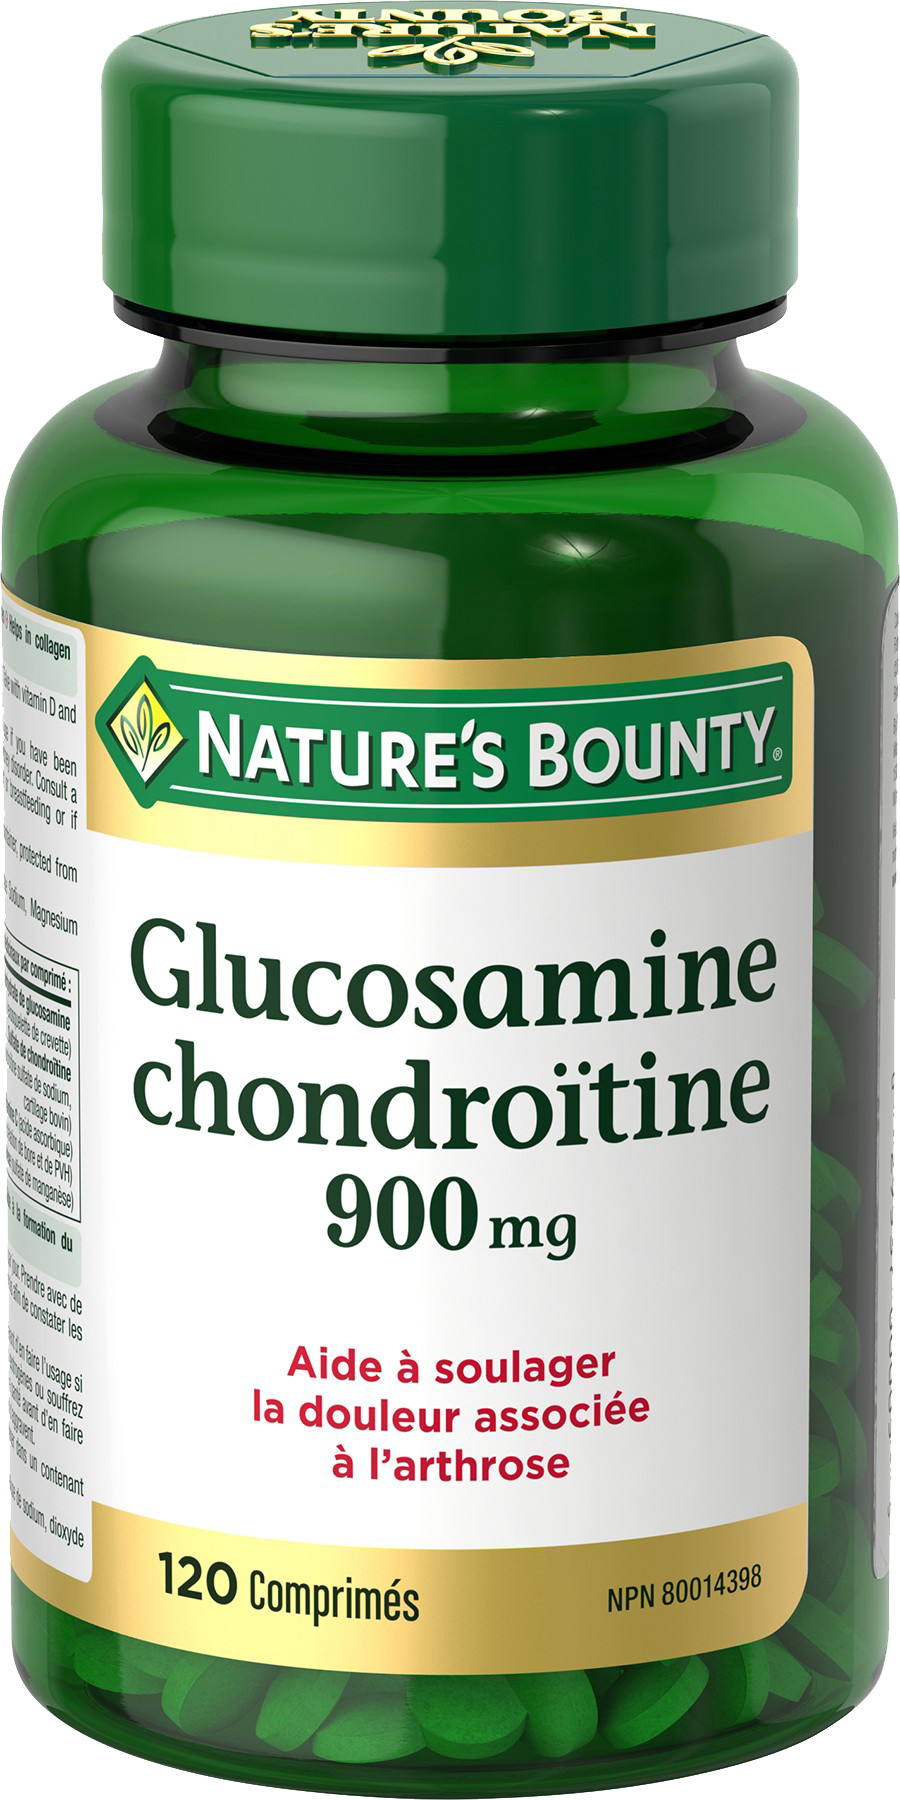 Glucosamine et Chondroïtine